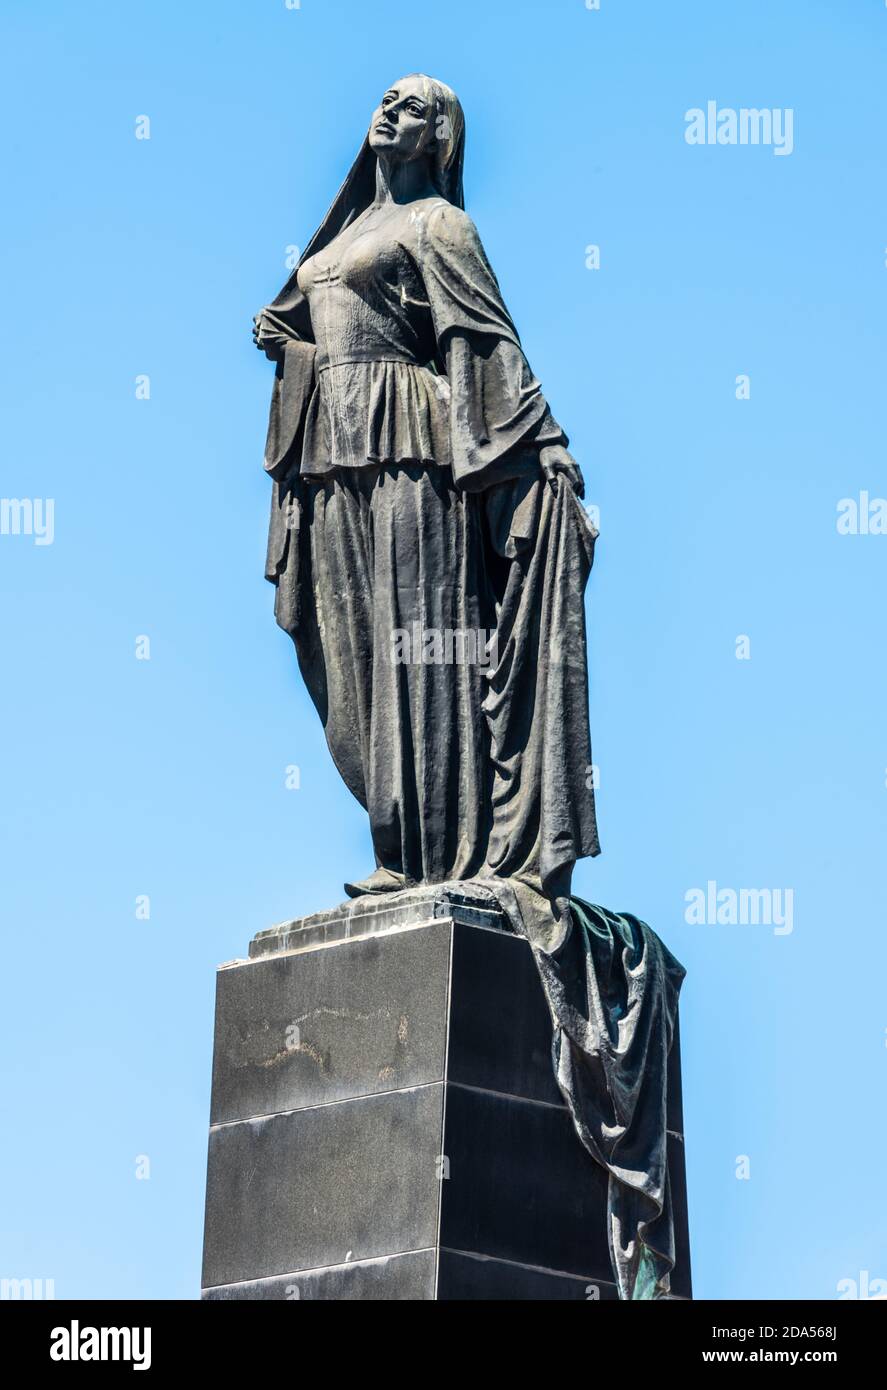 Baku, Azerbaijan – September 2, 2020.  Free Woman statue, depicting Azeri woman symbolically throwing off her hijab, in Baku, Azerbaijan. Located near Stock Photo